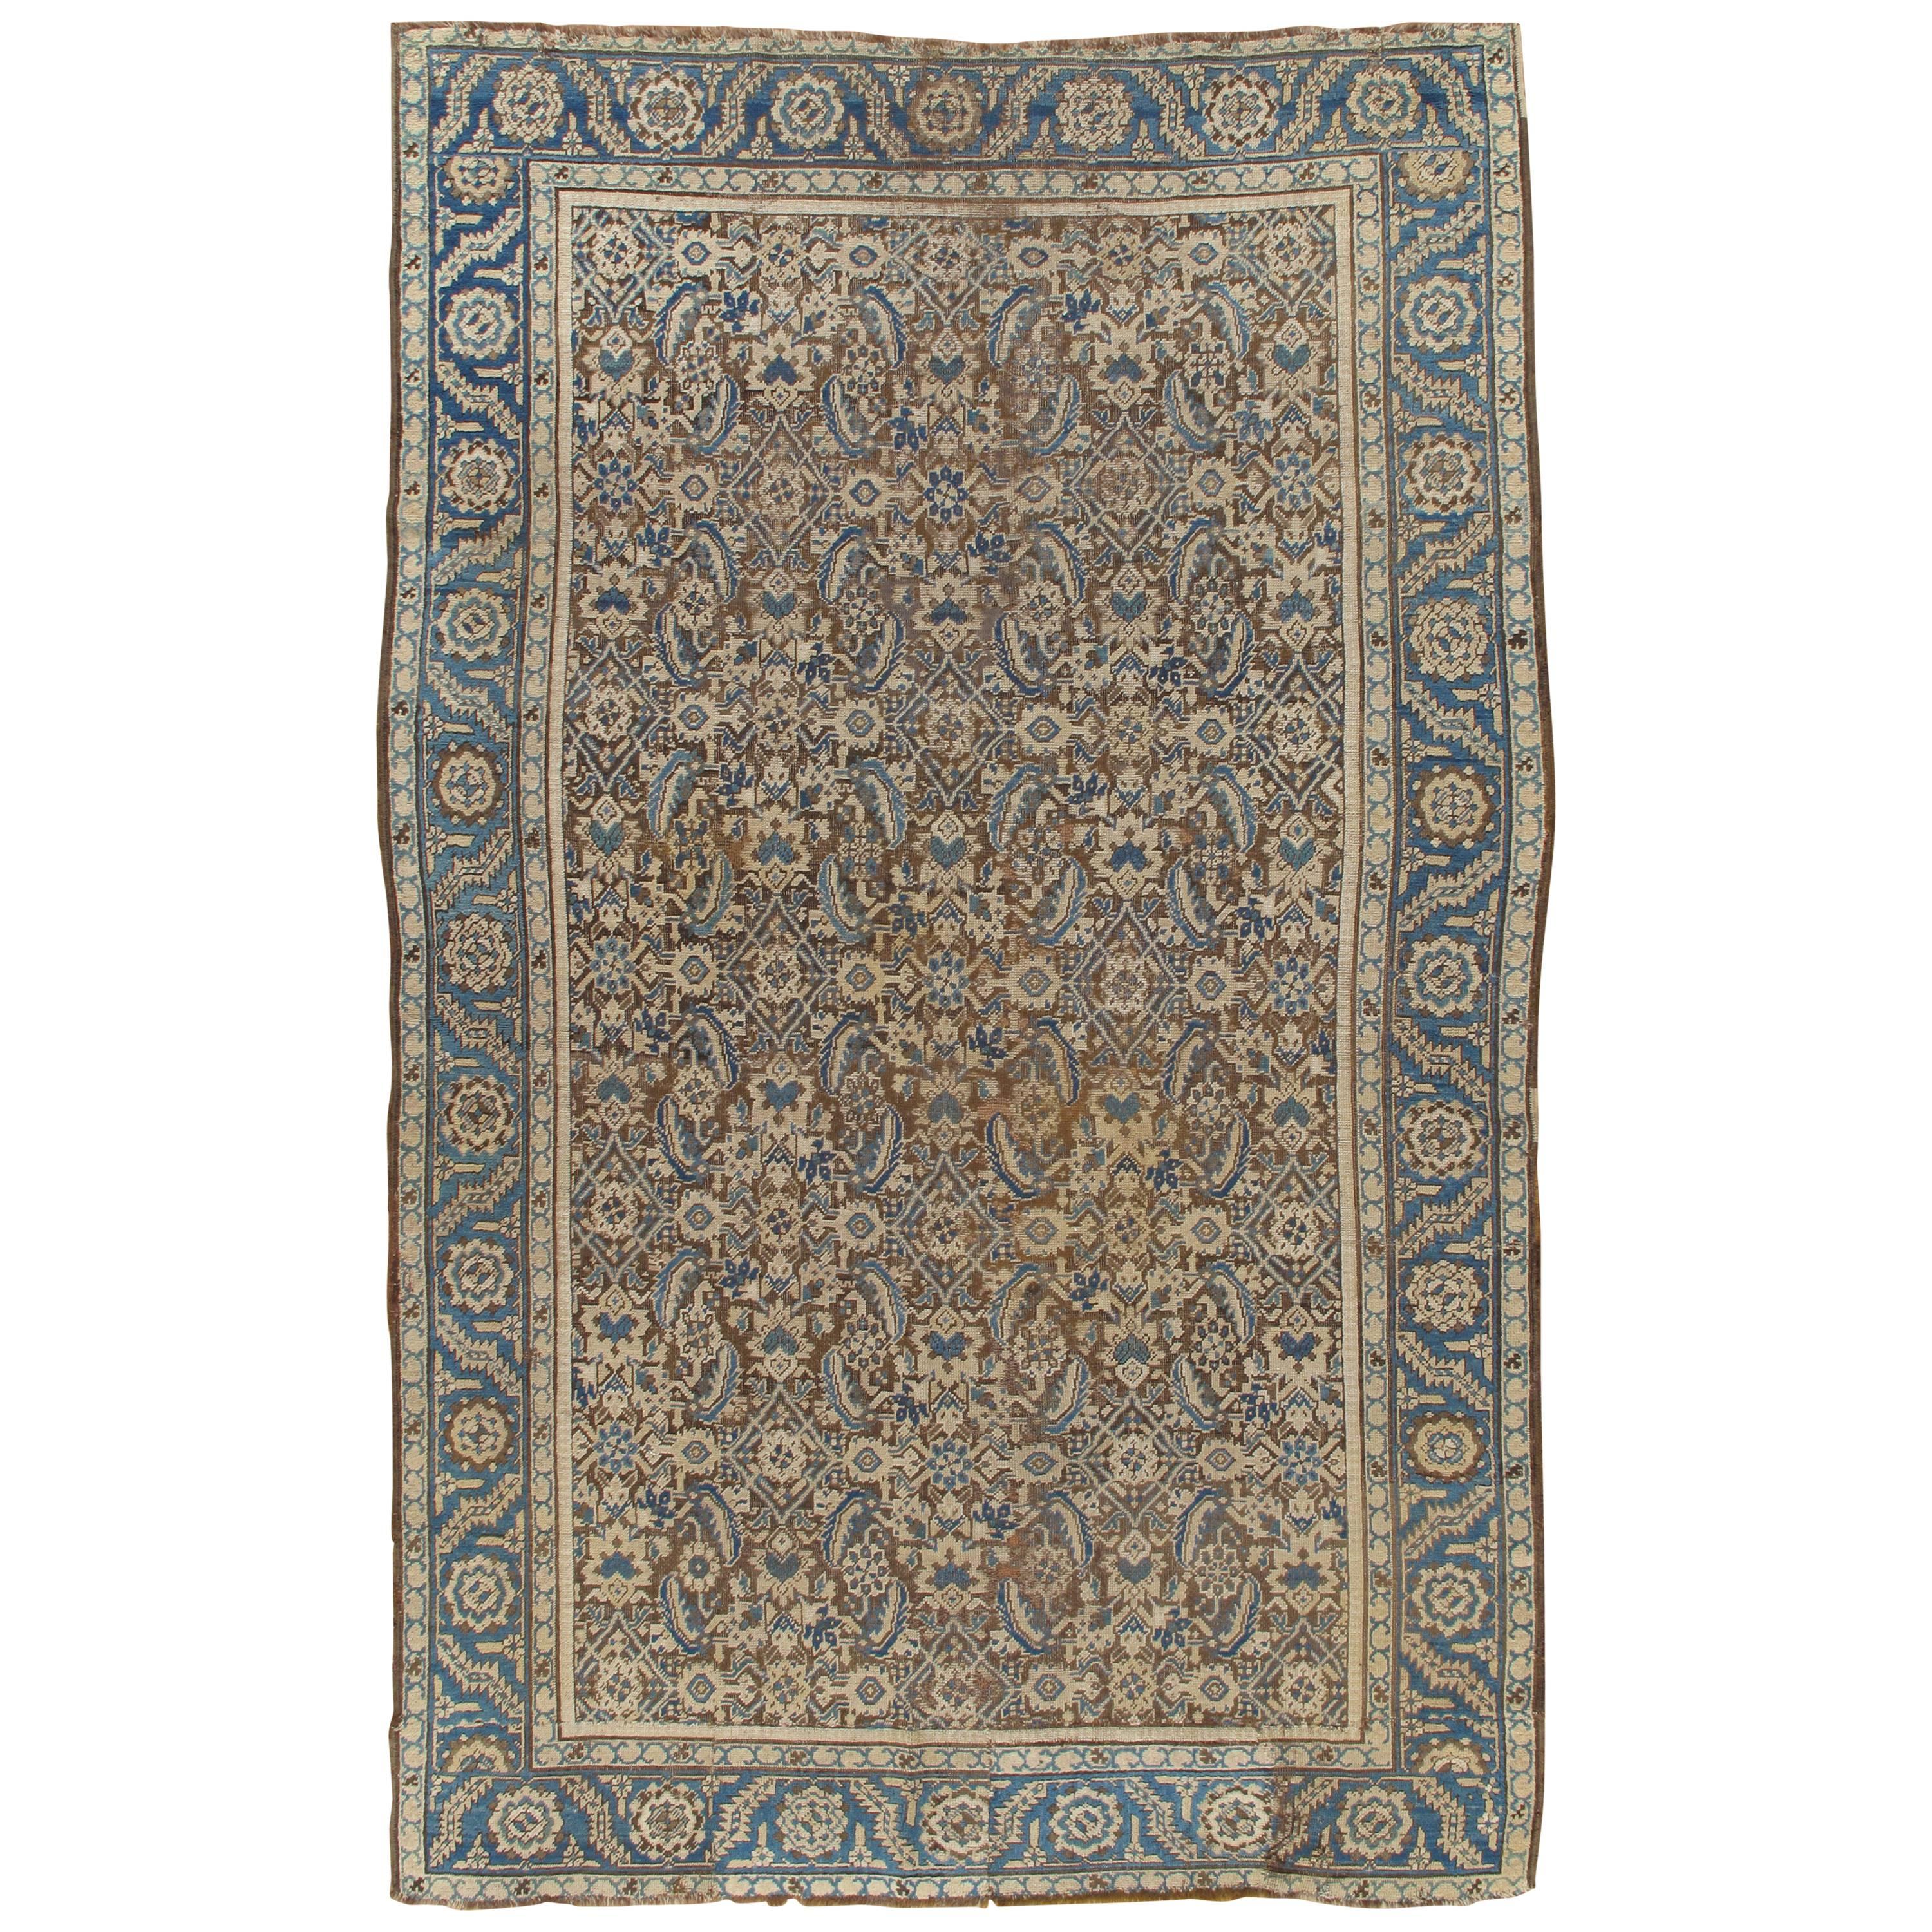 Antique Persian Bakhshaish, Taupe Handmade Wool Oriental Rug